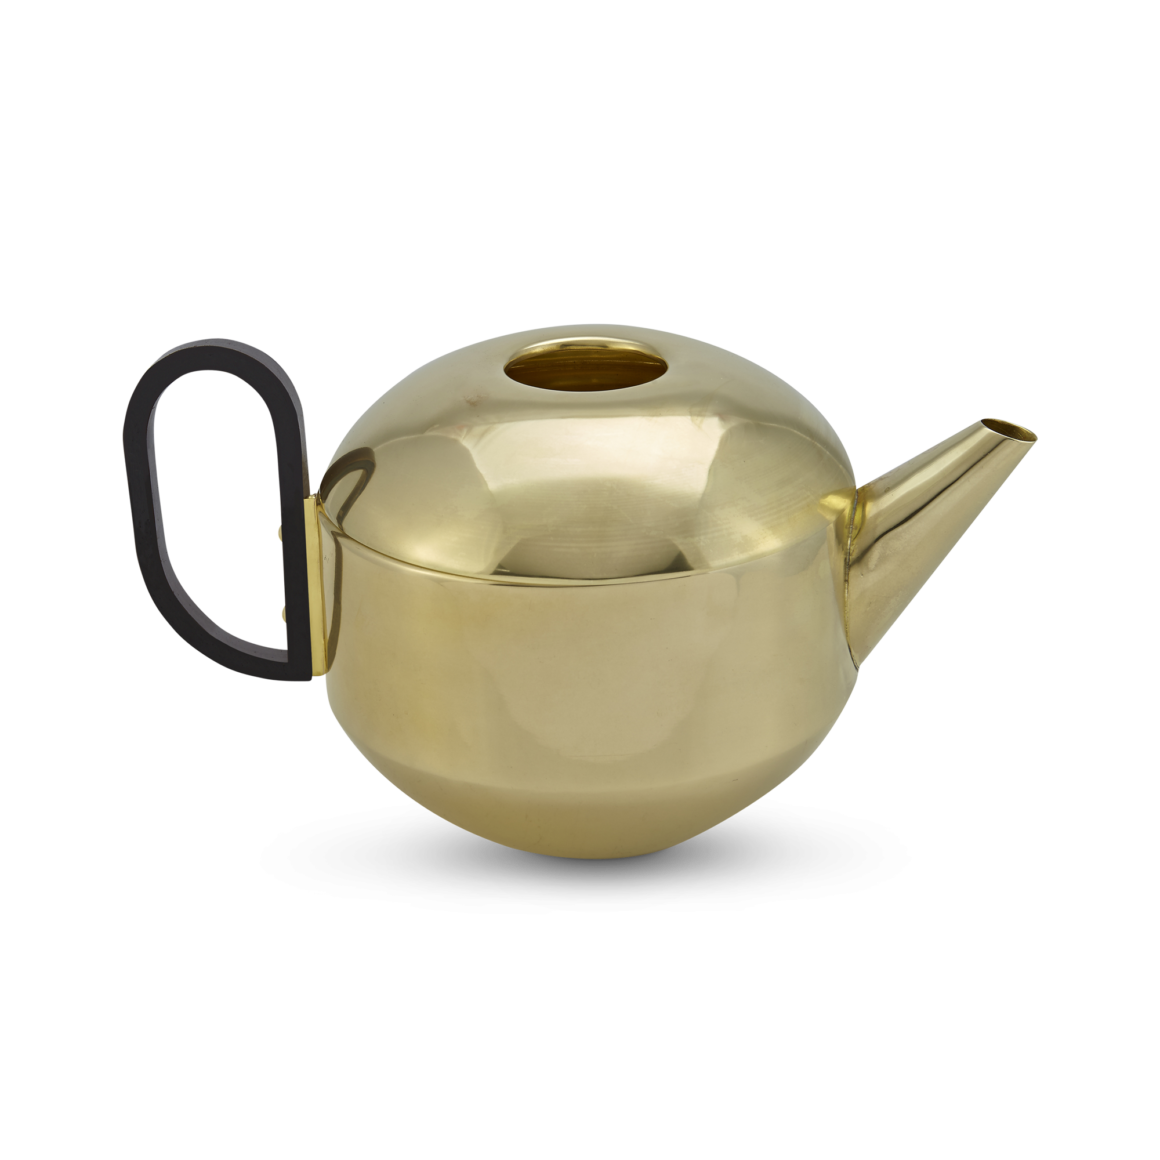 Best Minimalist Teapots & Kettles To Buy In 2022 - Tom Dixon Form Tea Pot